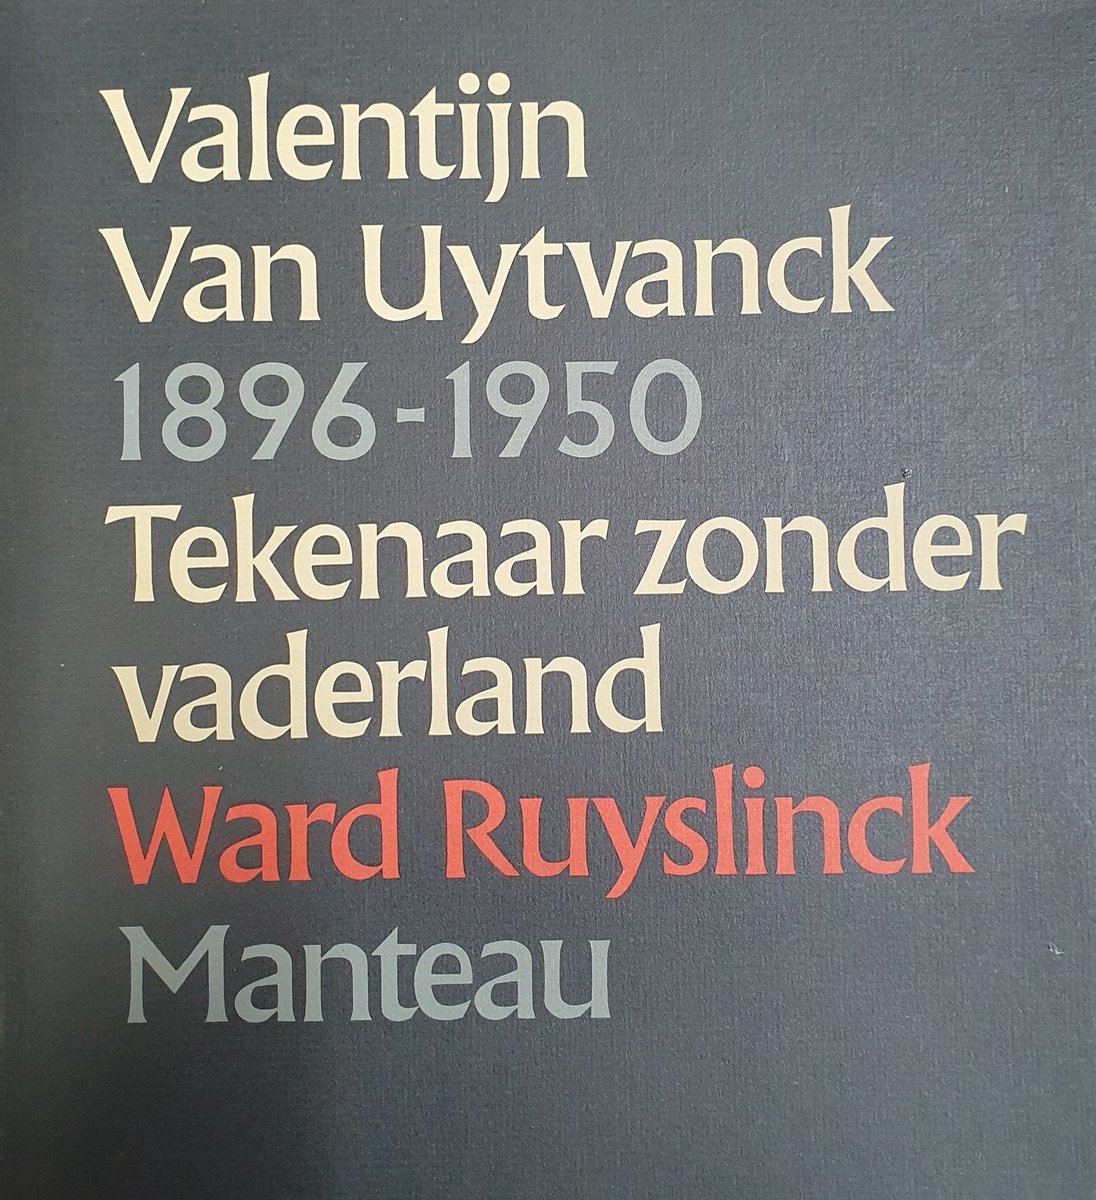 Valentyn van uytvanck - Ward Ruyslinck